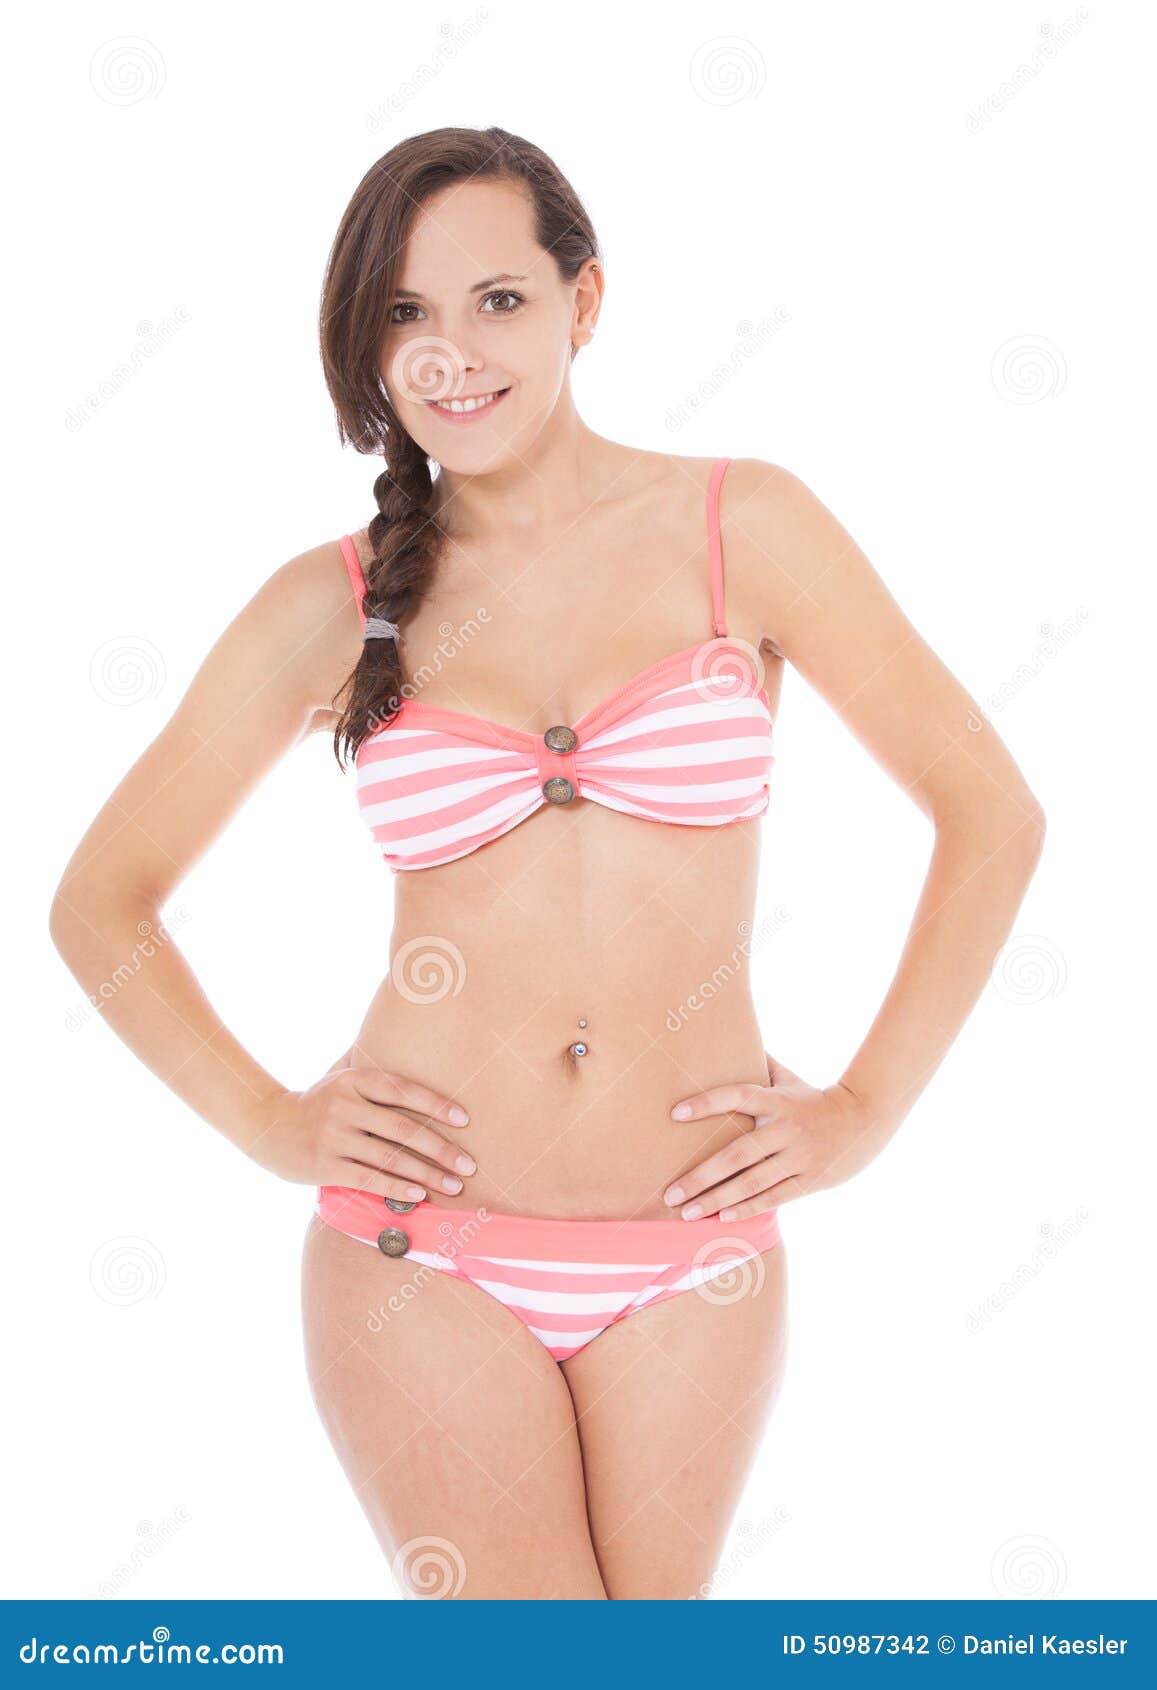 Spanking girl in bikini